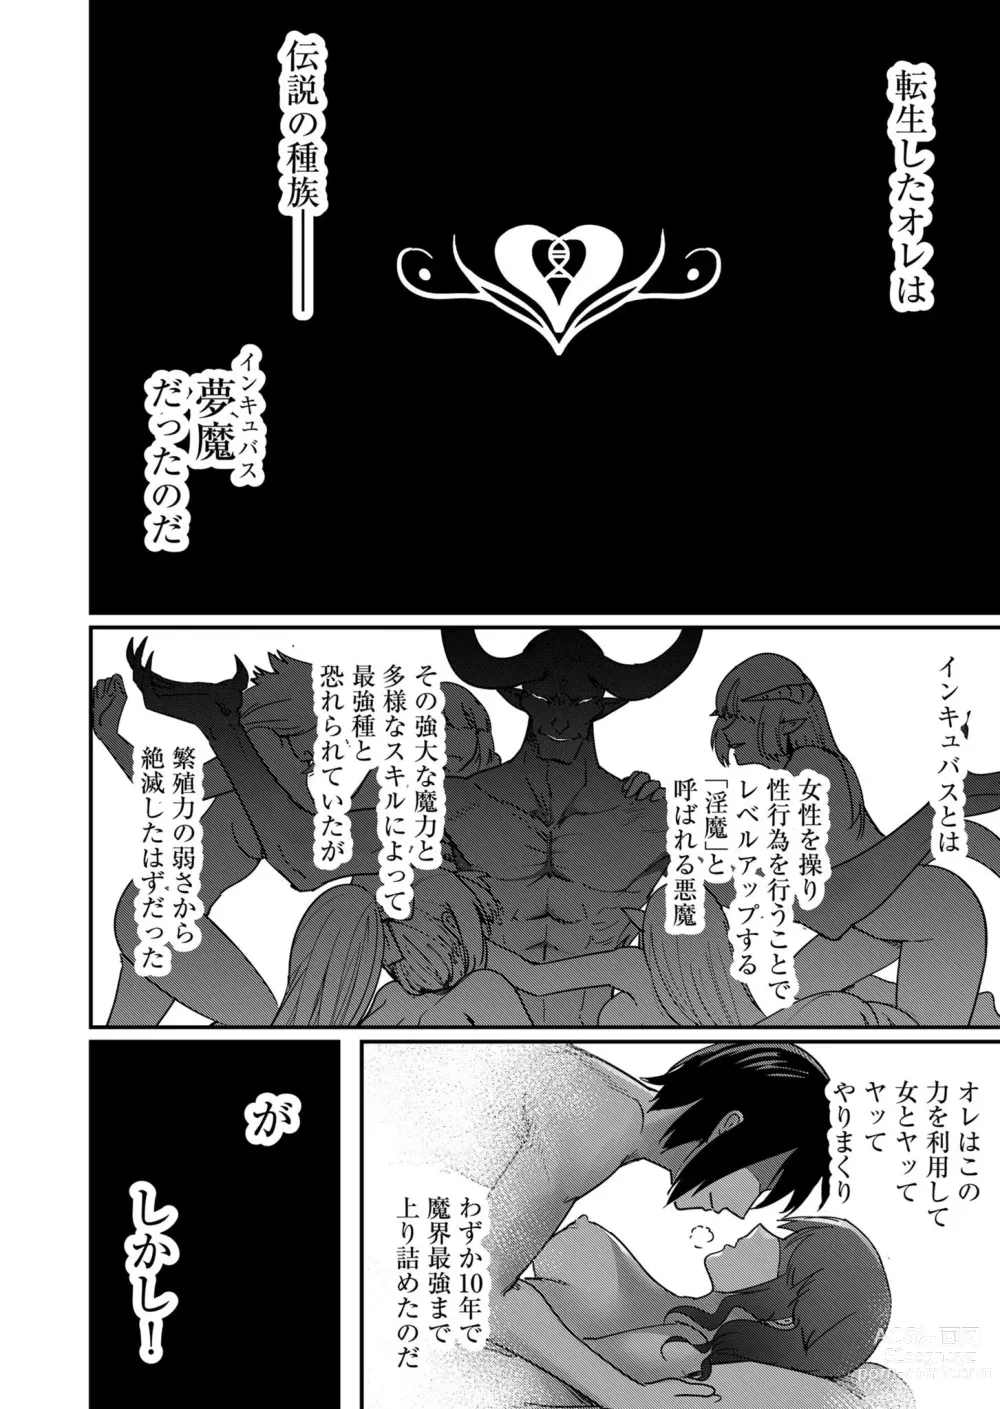 Page 22 of manga Kichiku Eiyuu Vol.01